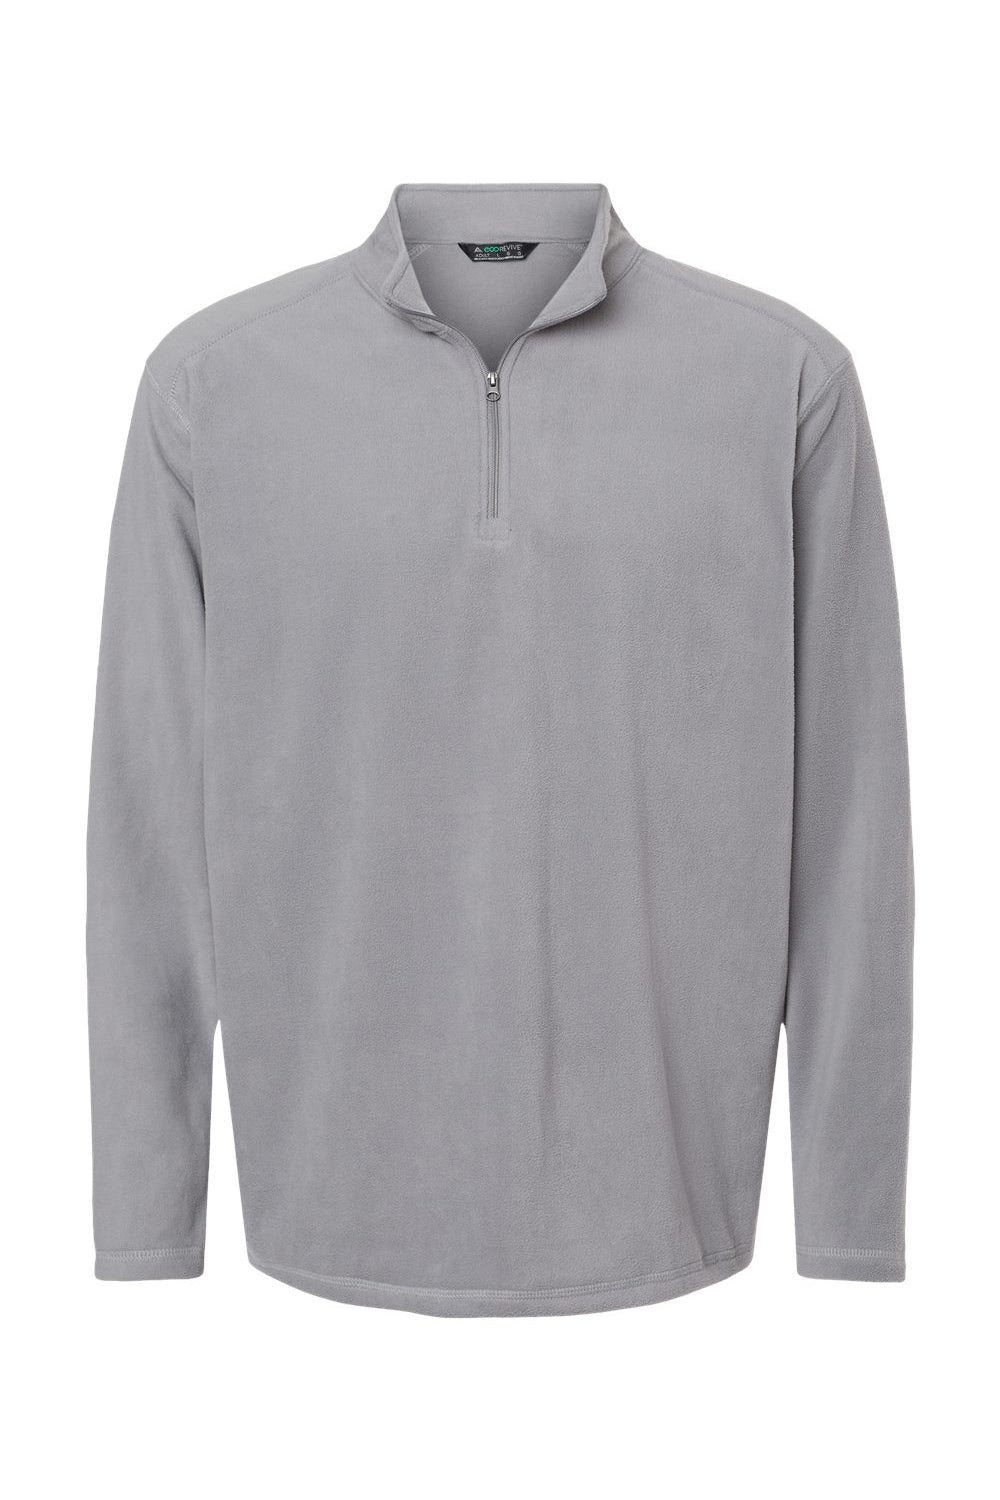 Augusta Sportswear 6863 Mens Eco Revive Micro Lite Fleece 1/4 Zip Pullover Athletic Grey Flat Front